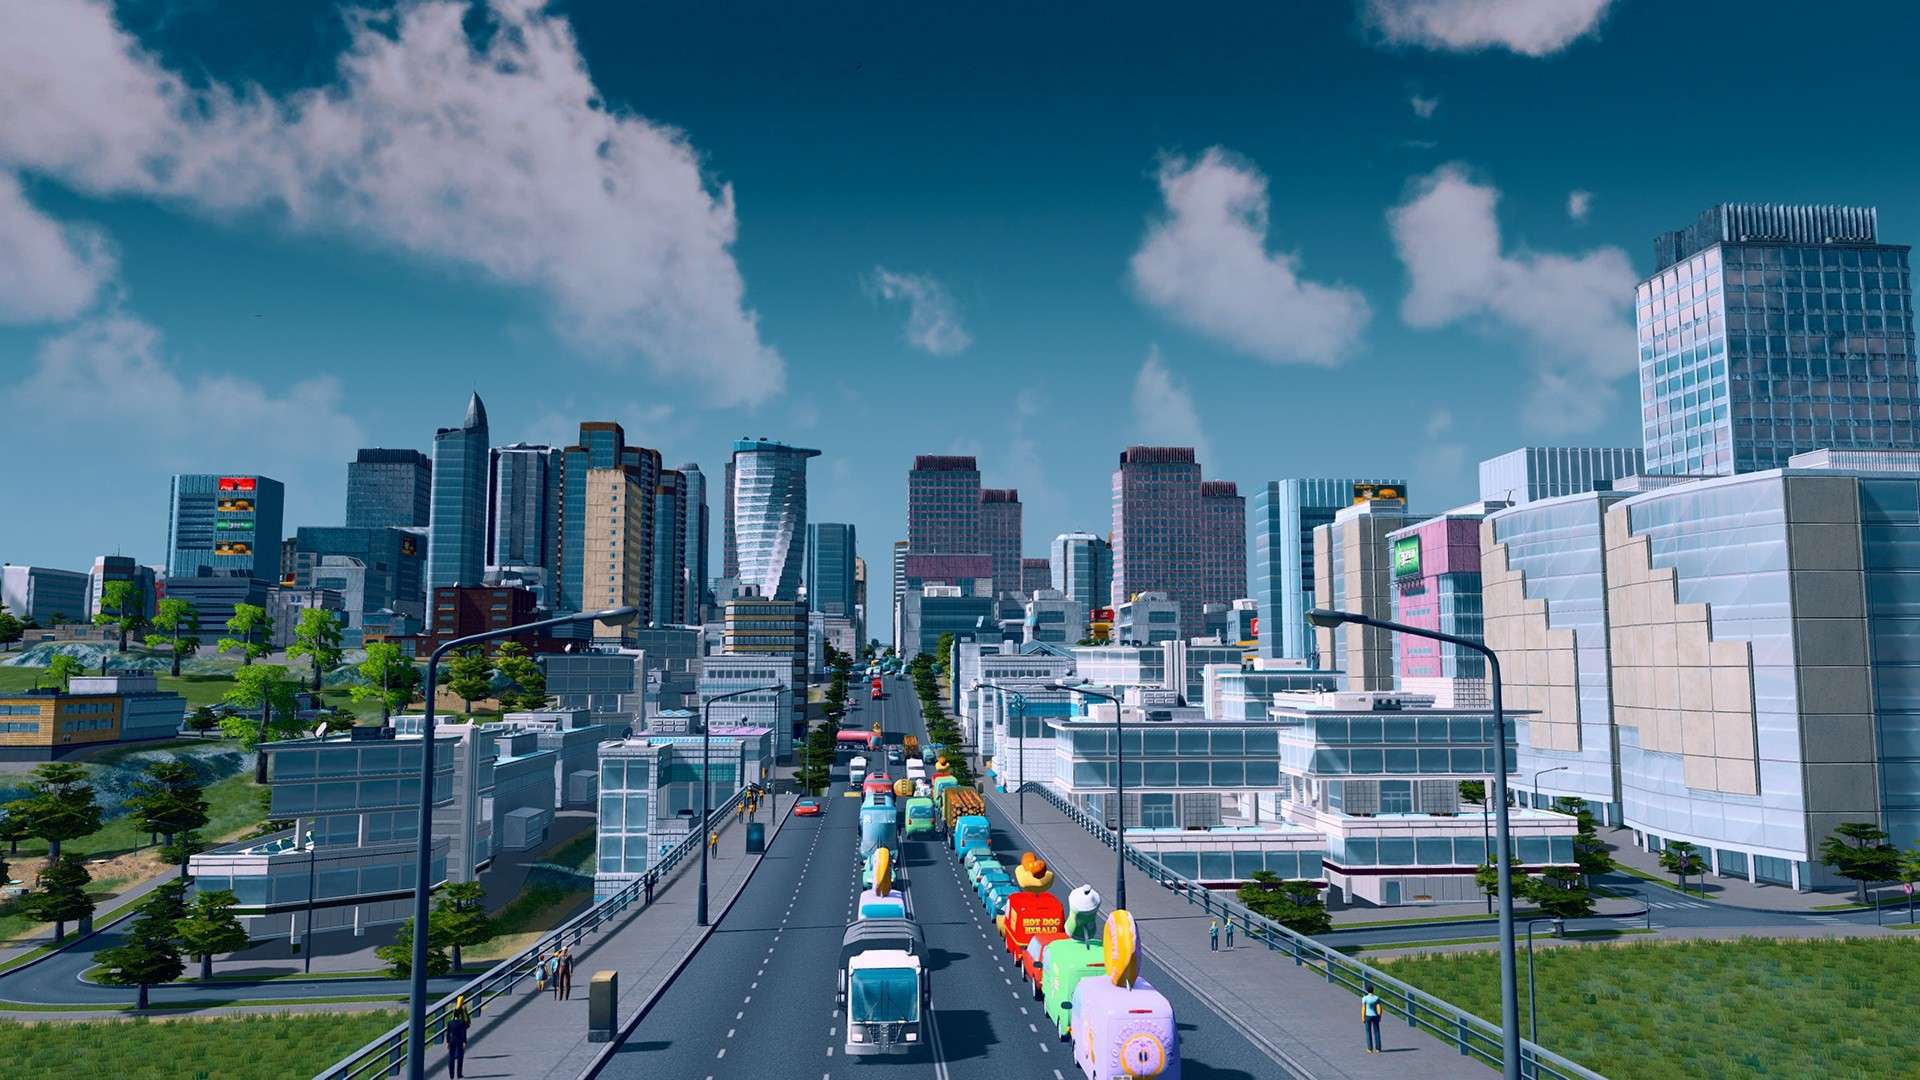 Presentado el próximo DLC para Cities: Skylines